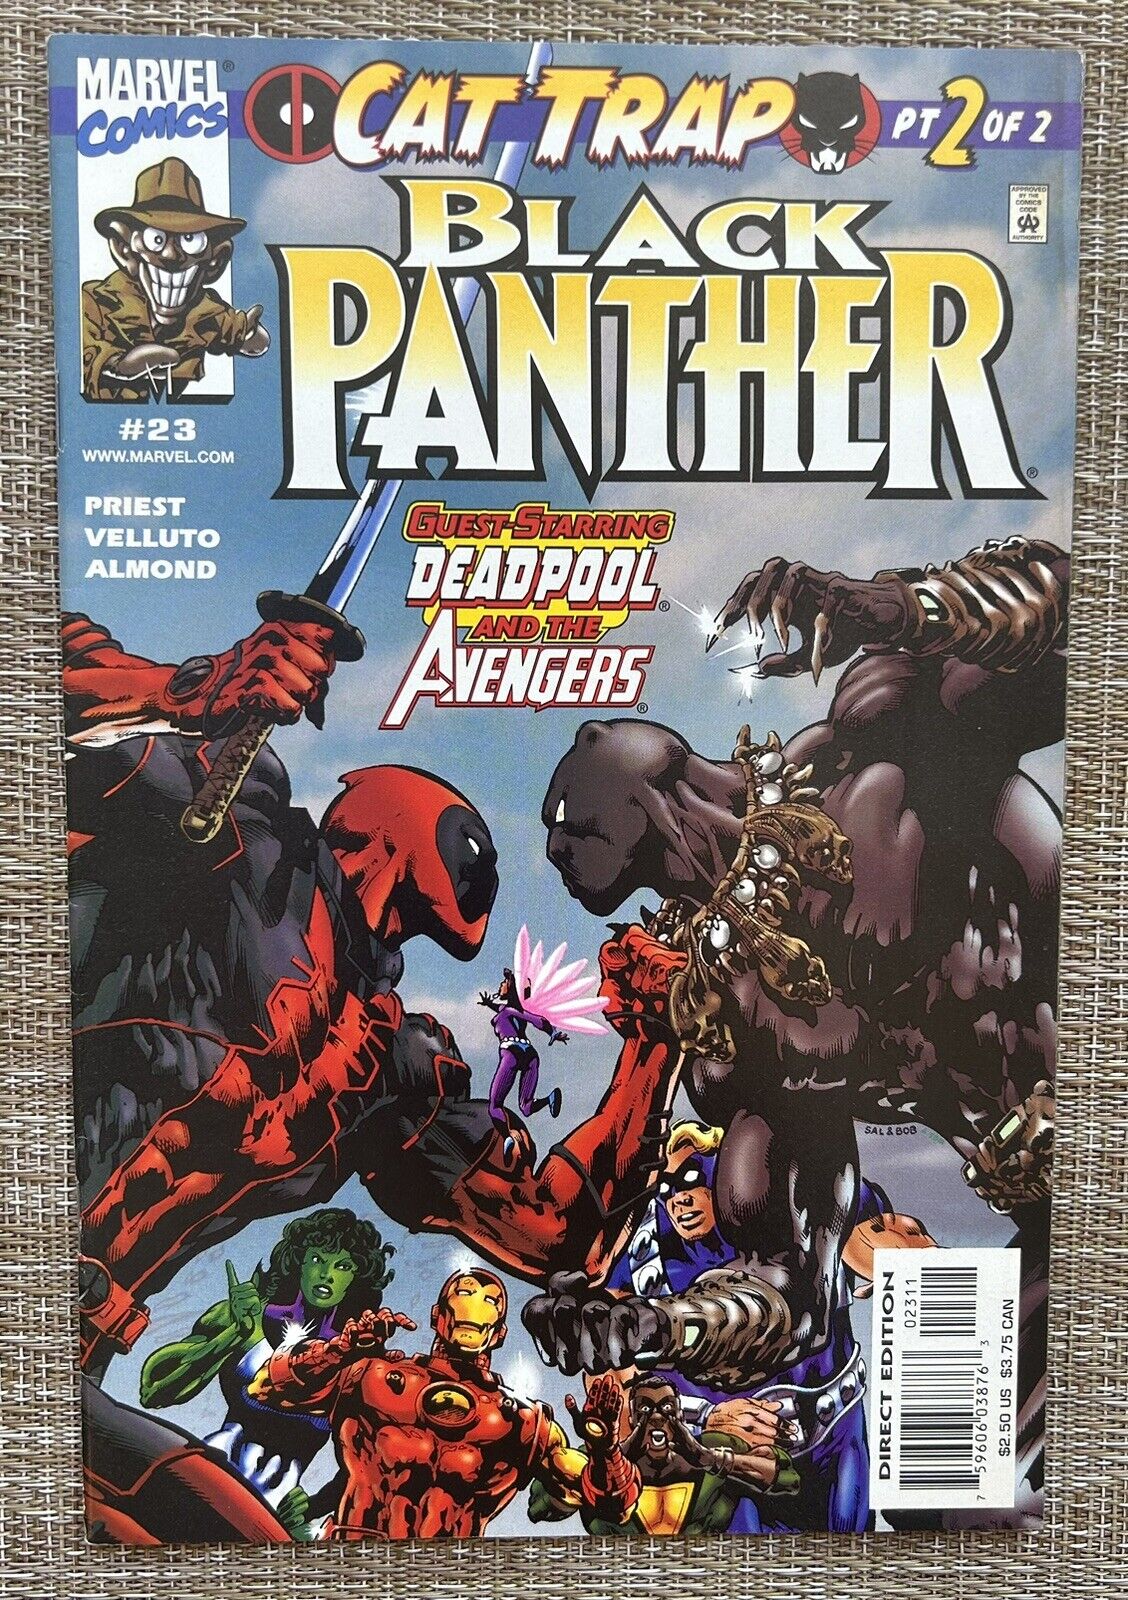 BLACK PANTHER # 23, Deadpool Appearance Cat Trap Part 2, Marvel Comic Book 2000